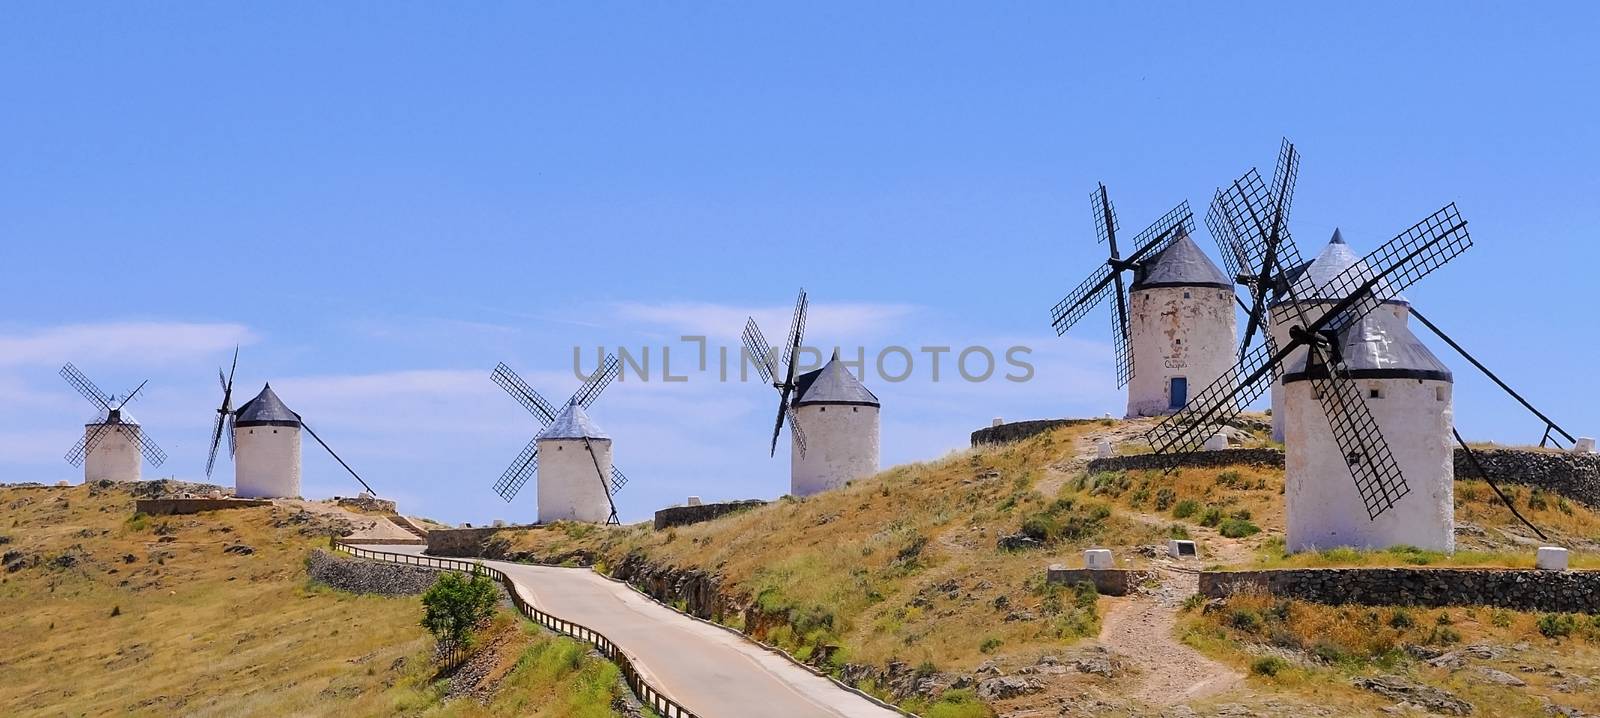 traditional windmills, Consuegra spain by itsajoop